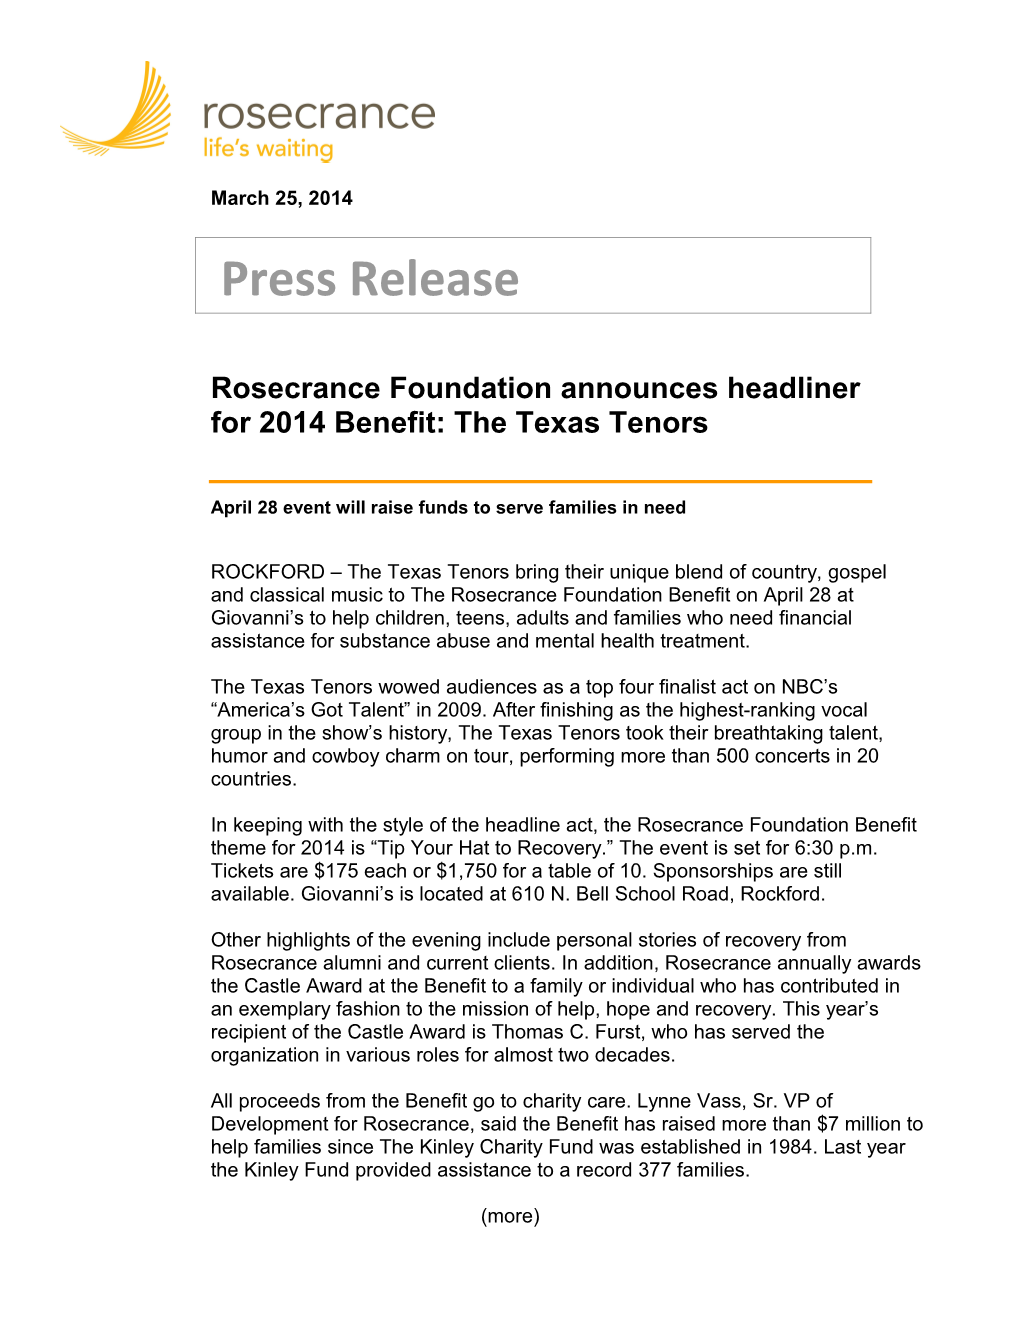 Rosecrance Foundation Announces Headliner